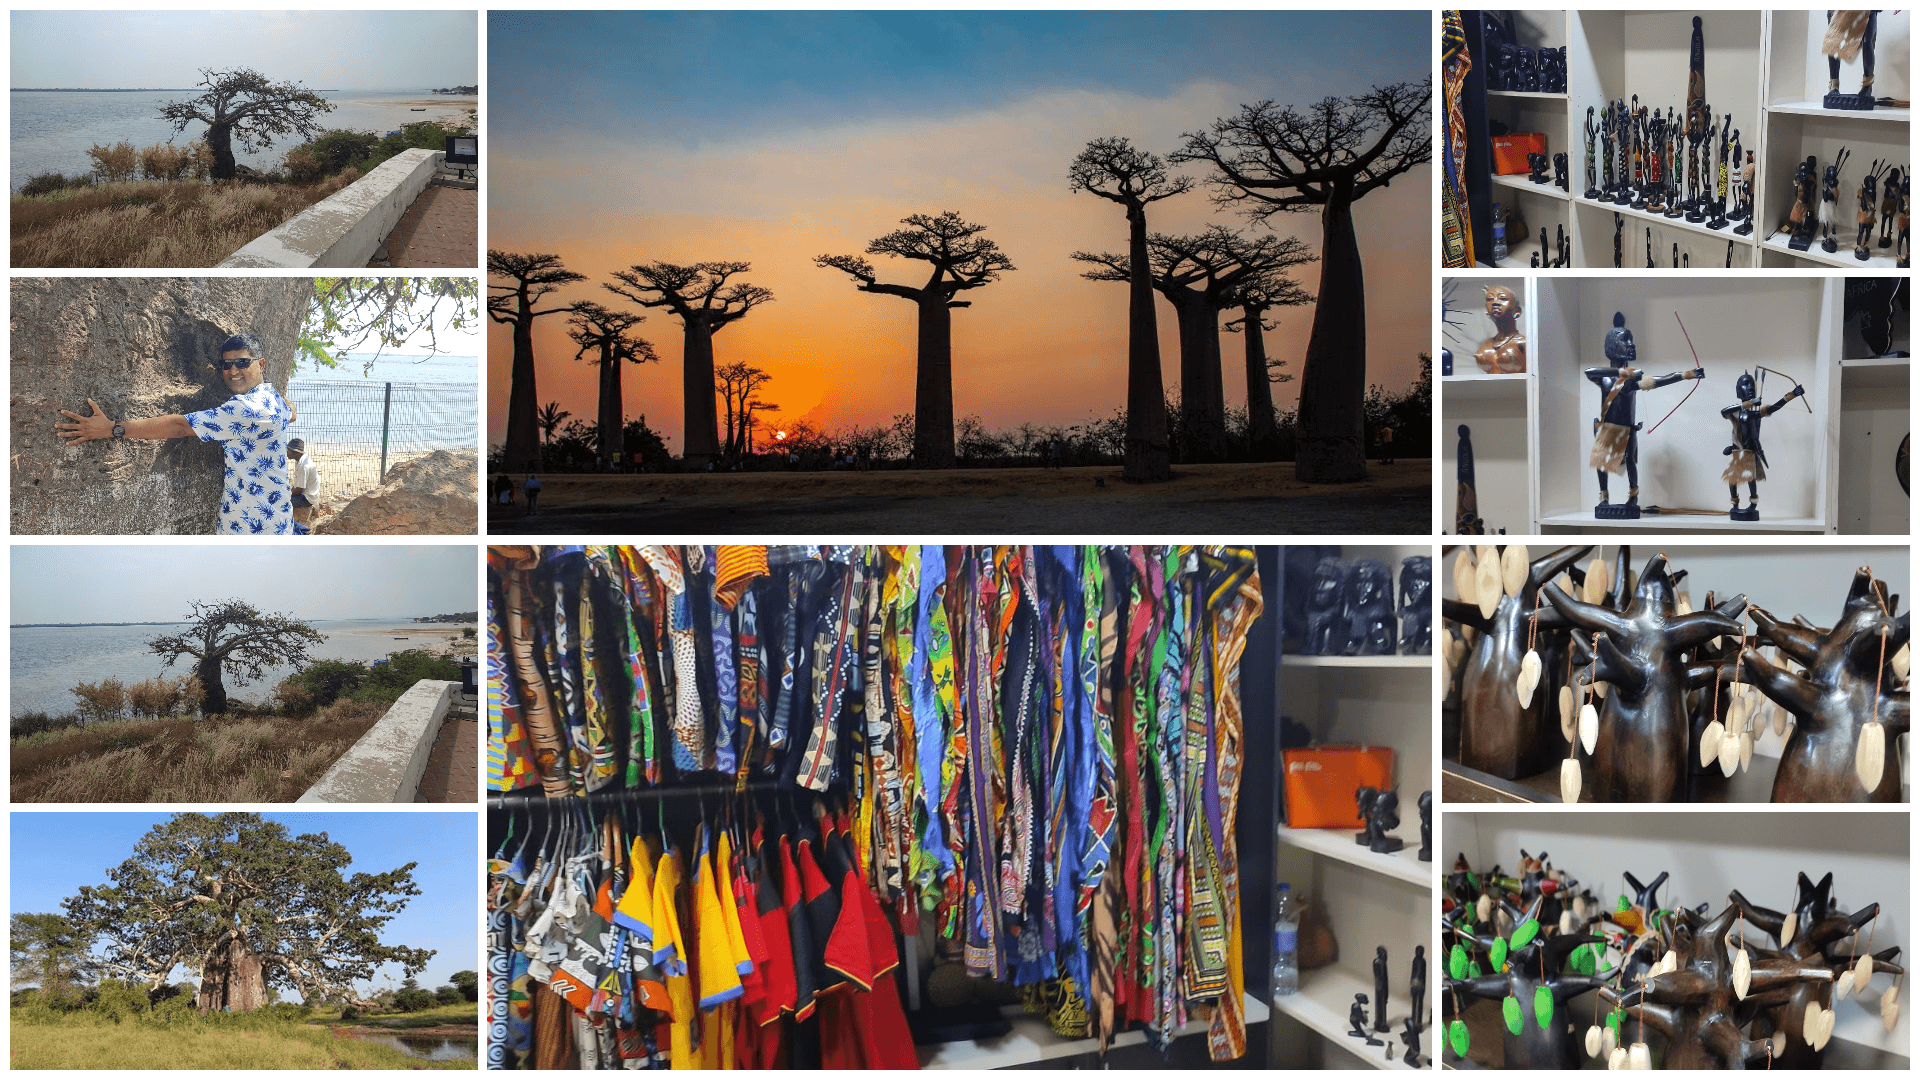 Visit to Angola Baobab Tree by Amar Infotech India